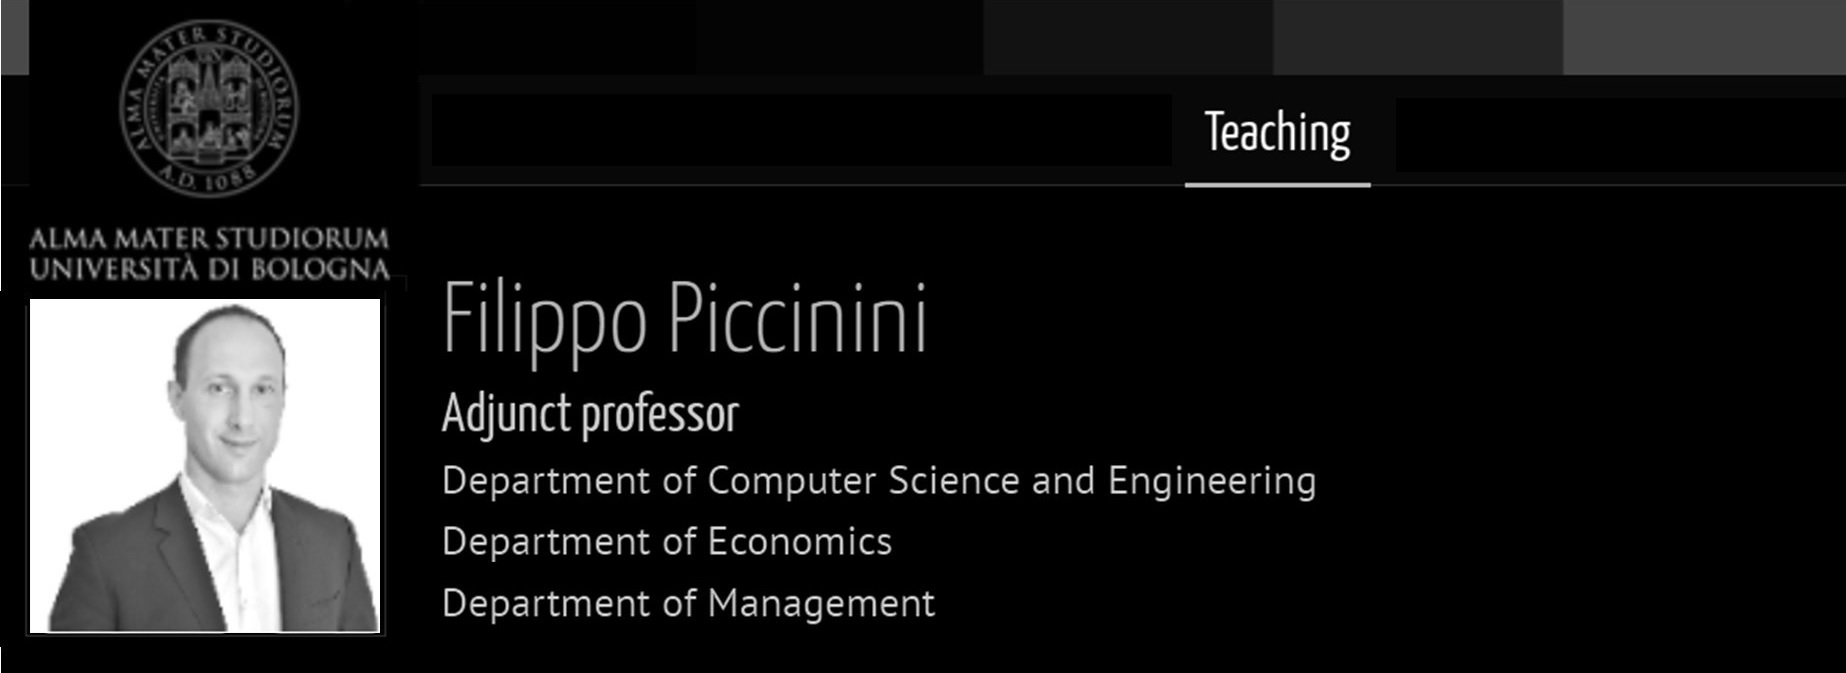 Piccinini Teachings 2020